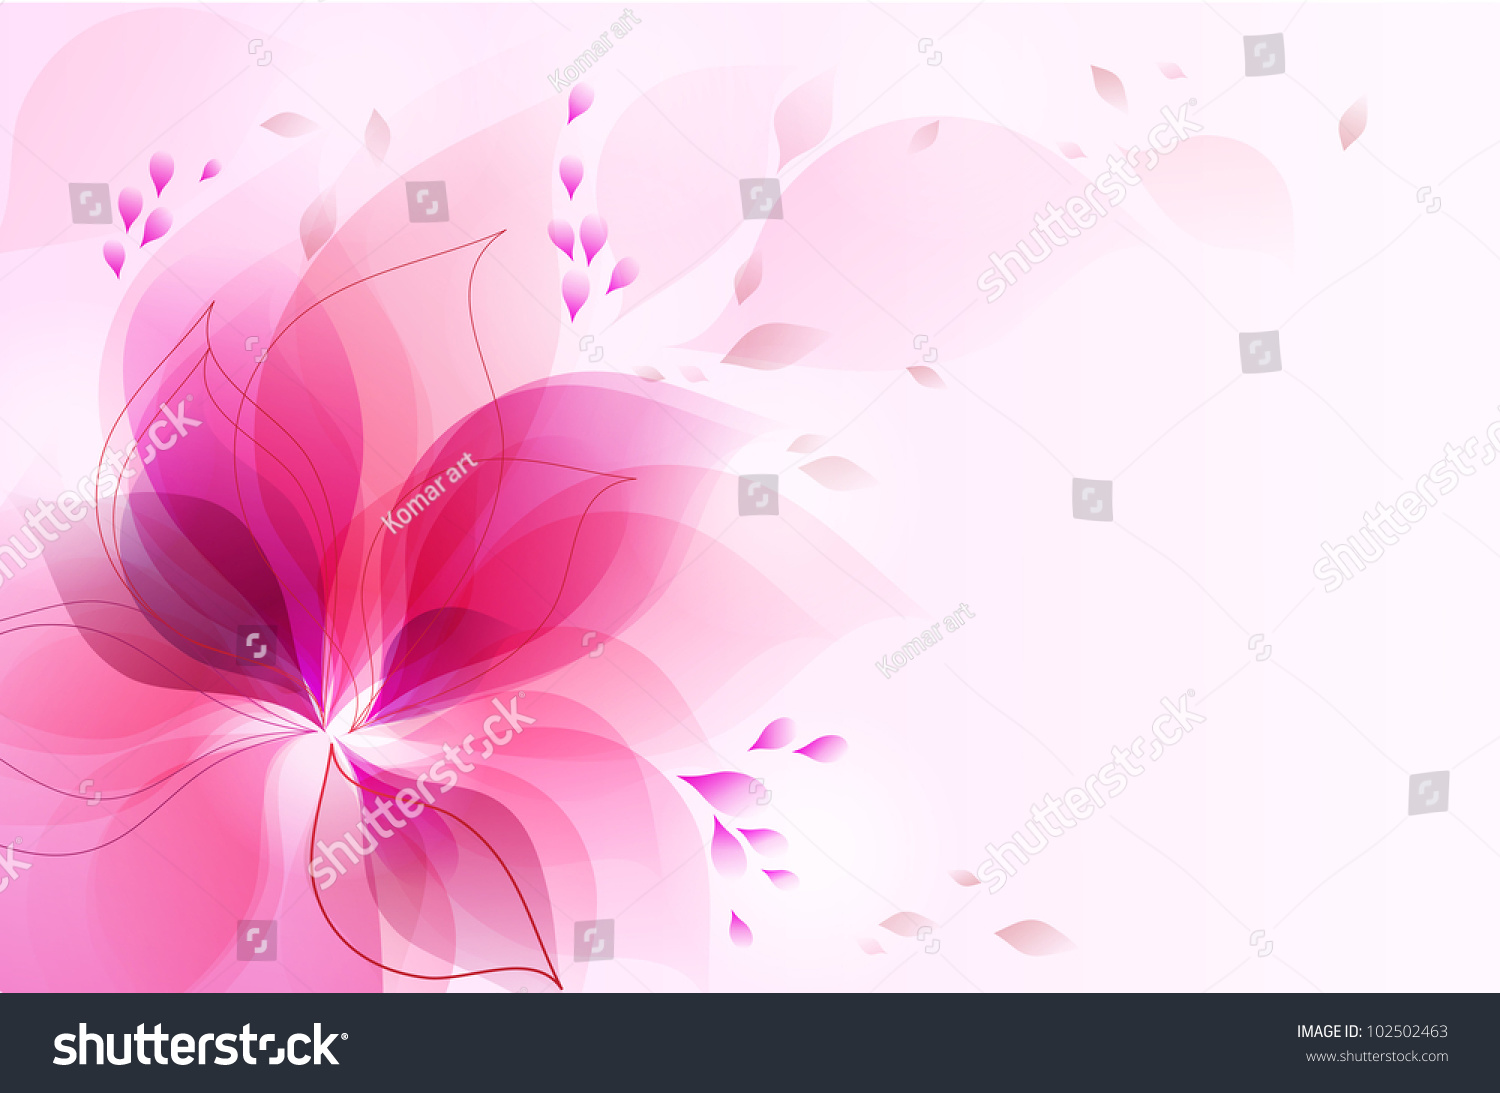 Stylish Floral Background . Stock Vector Illustration 102502463 ...